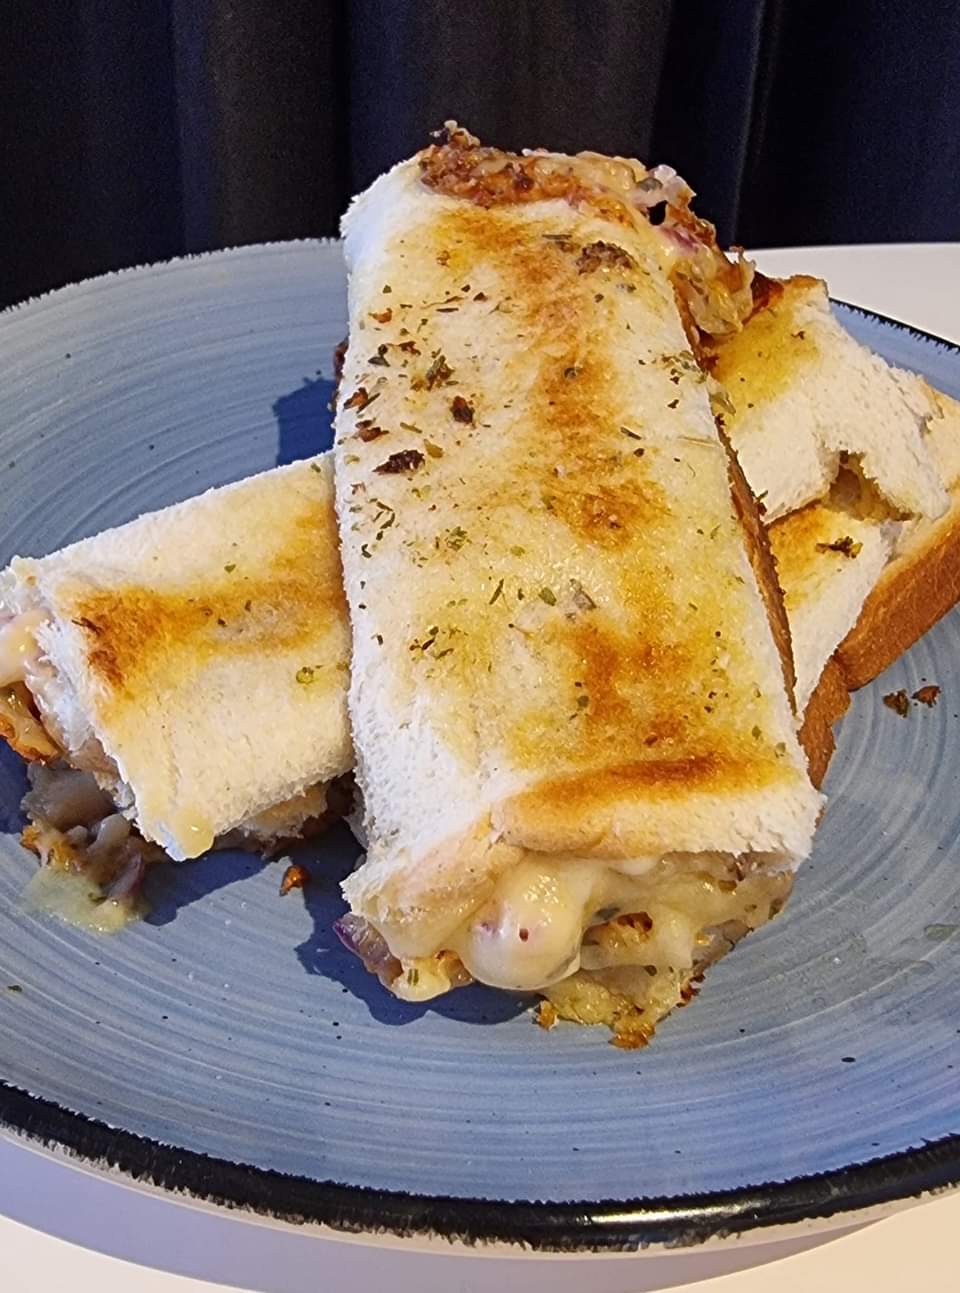 Cheese rolls